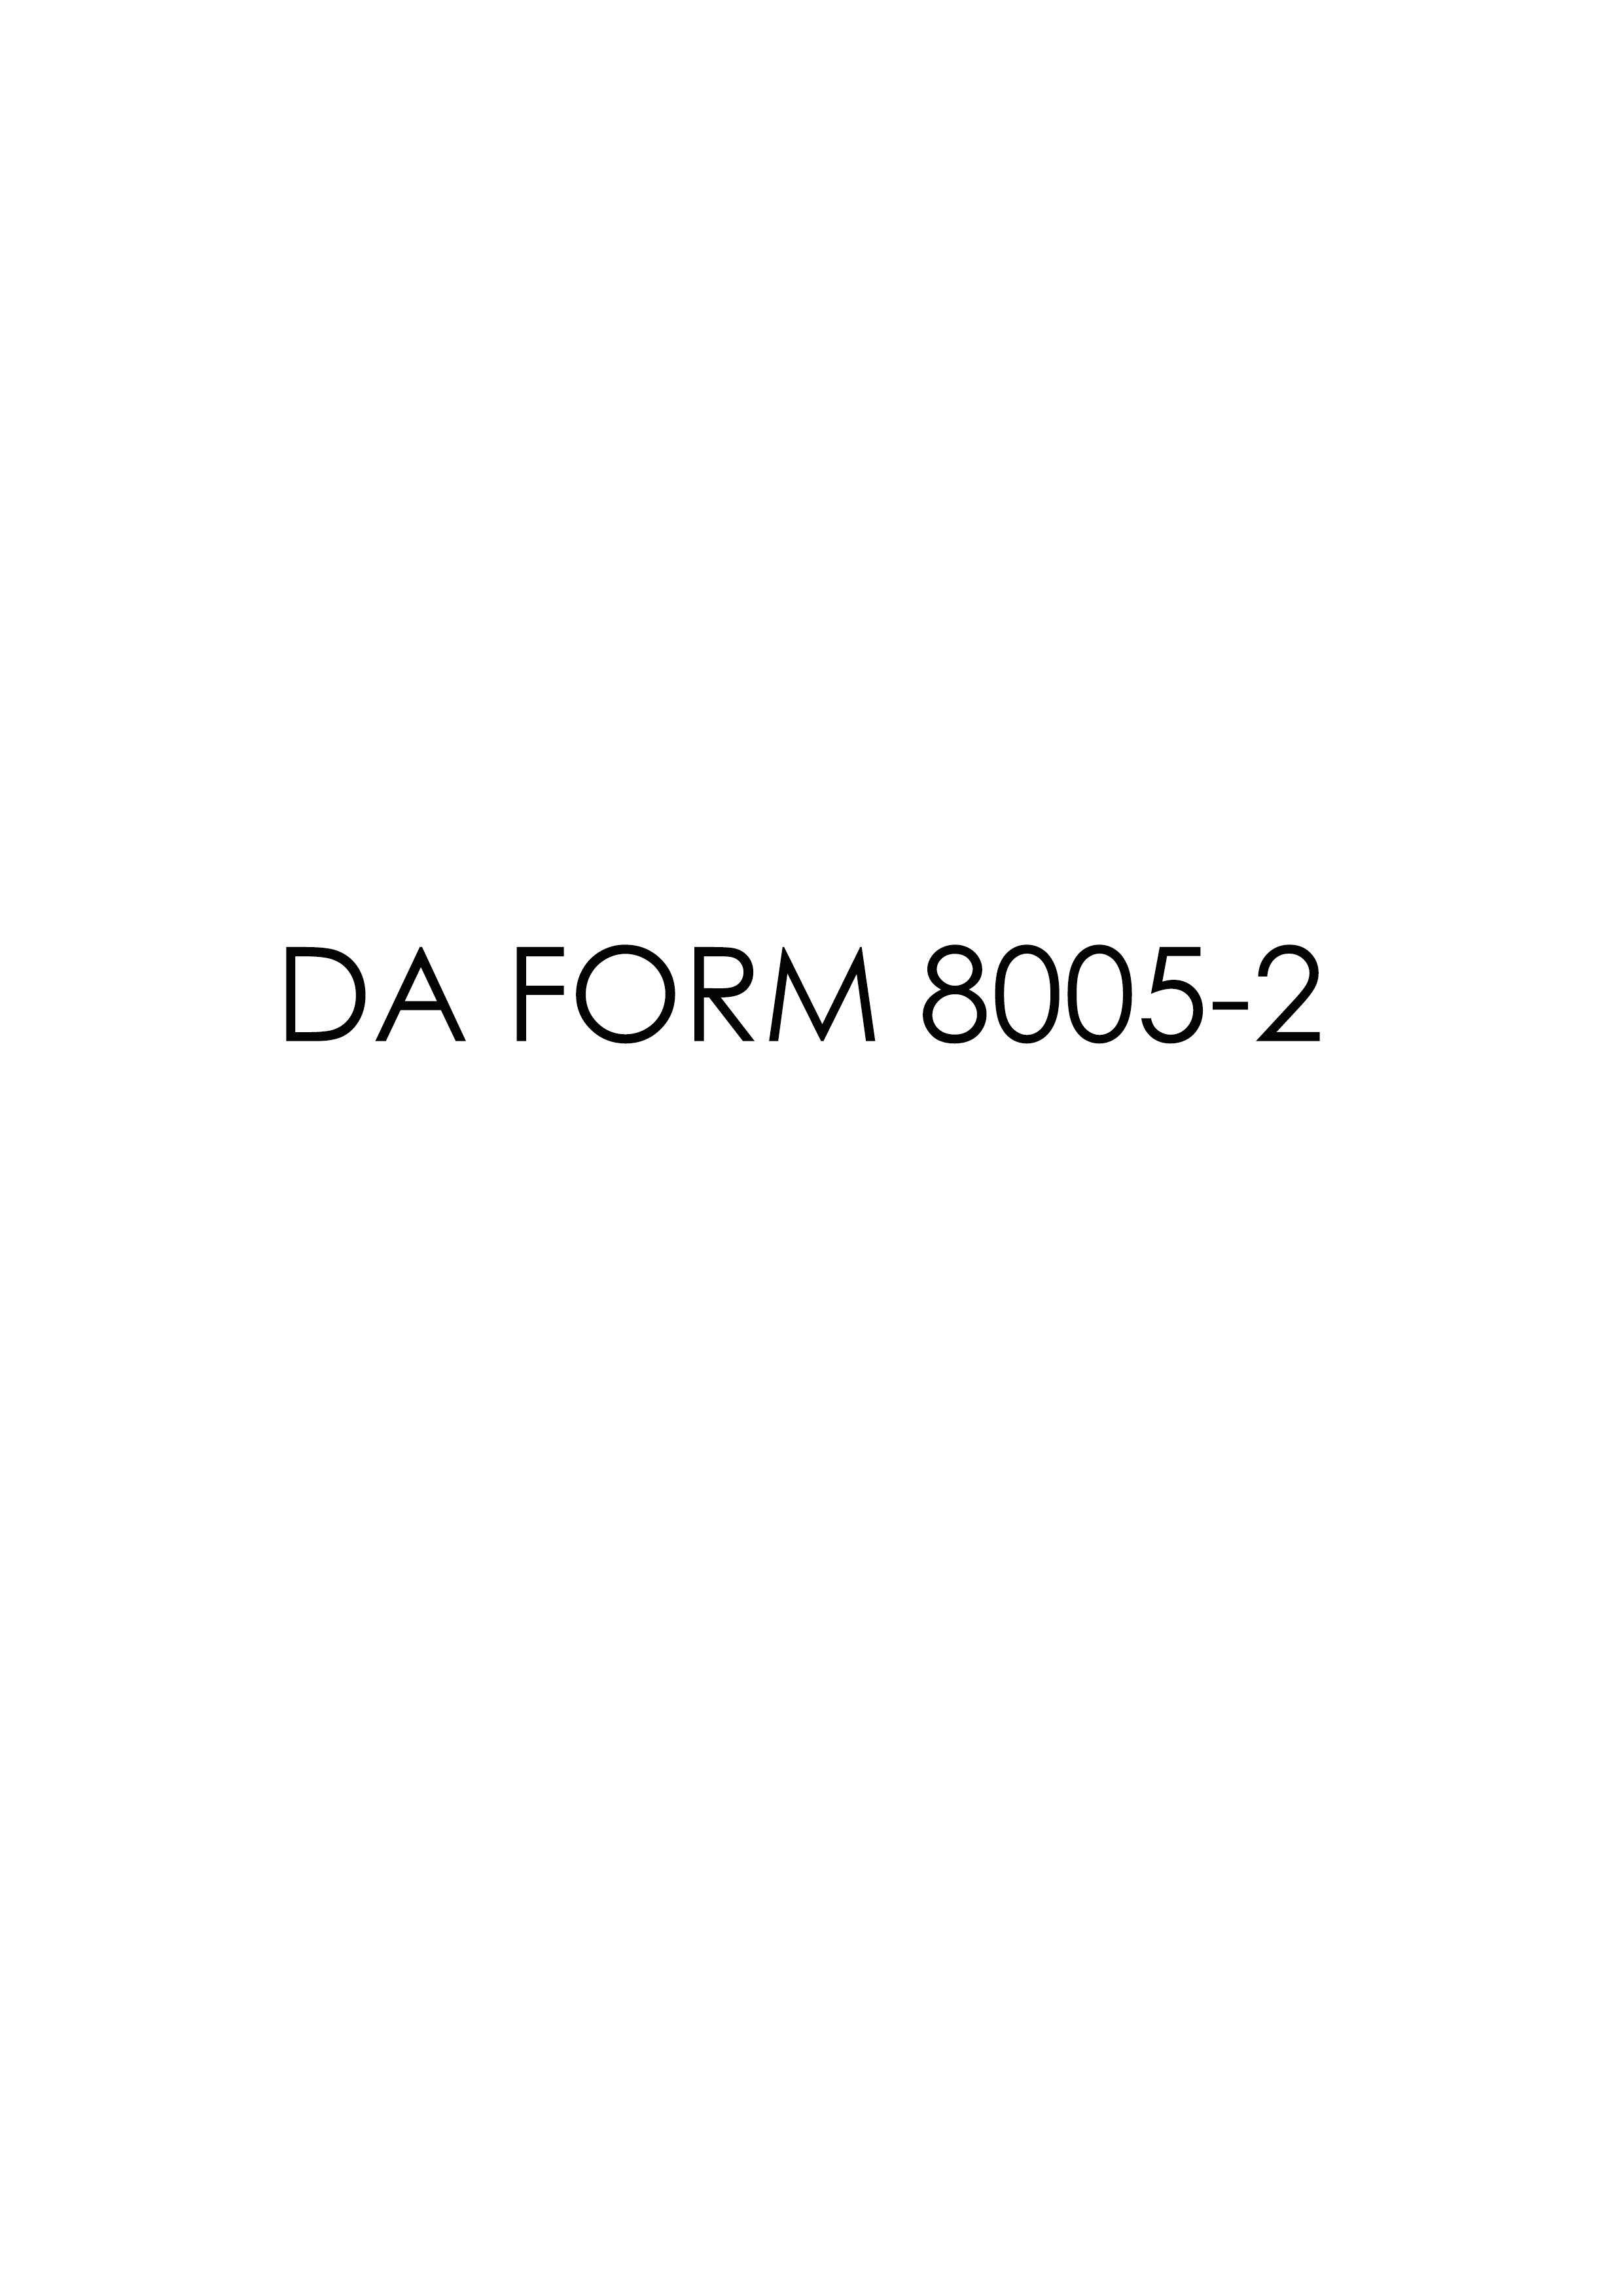 Download da form 8005-2